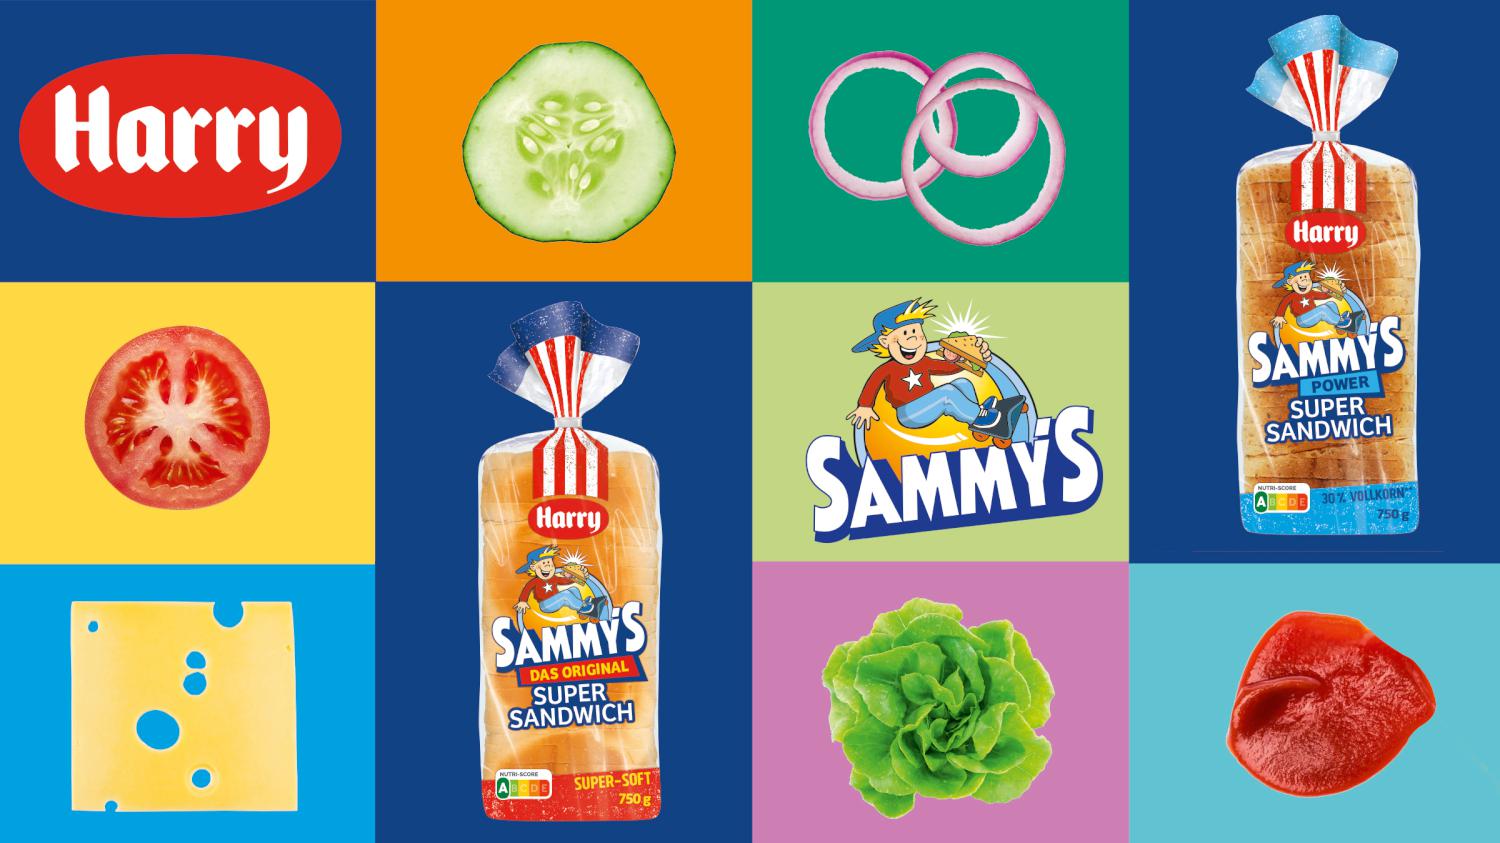 Harry Sammys Super Sandwich Relaunch Graphic Design Branding Strategy Packaging Design Line Extension